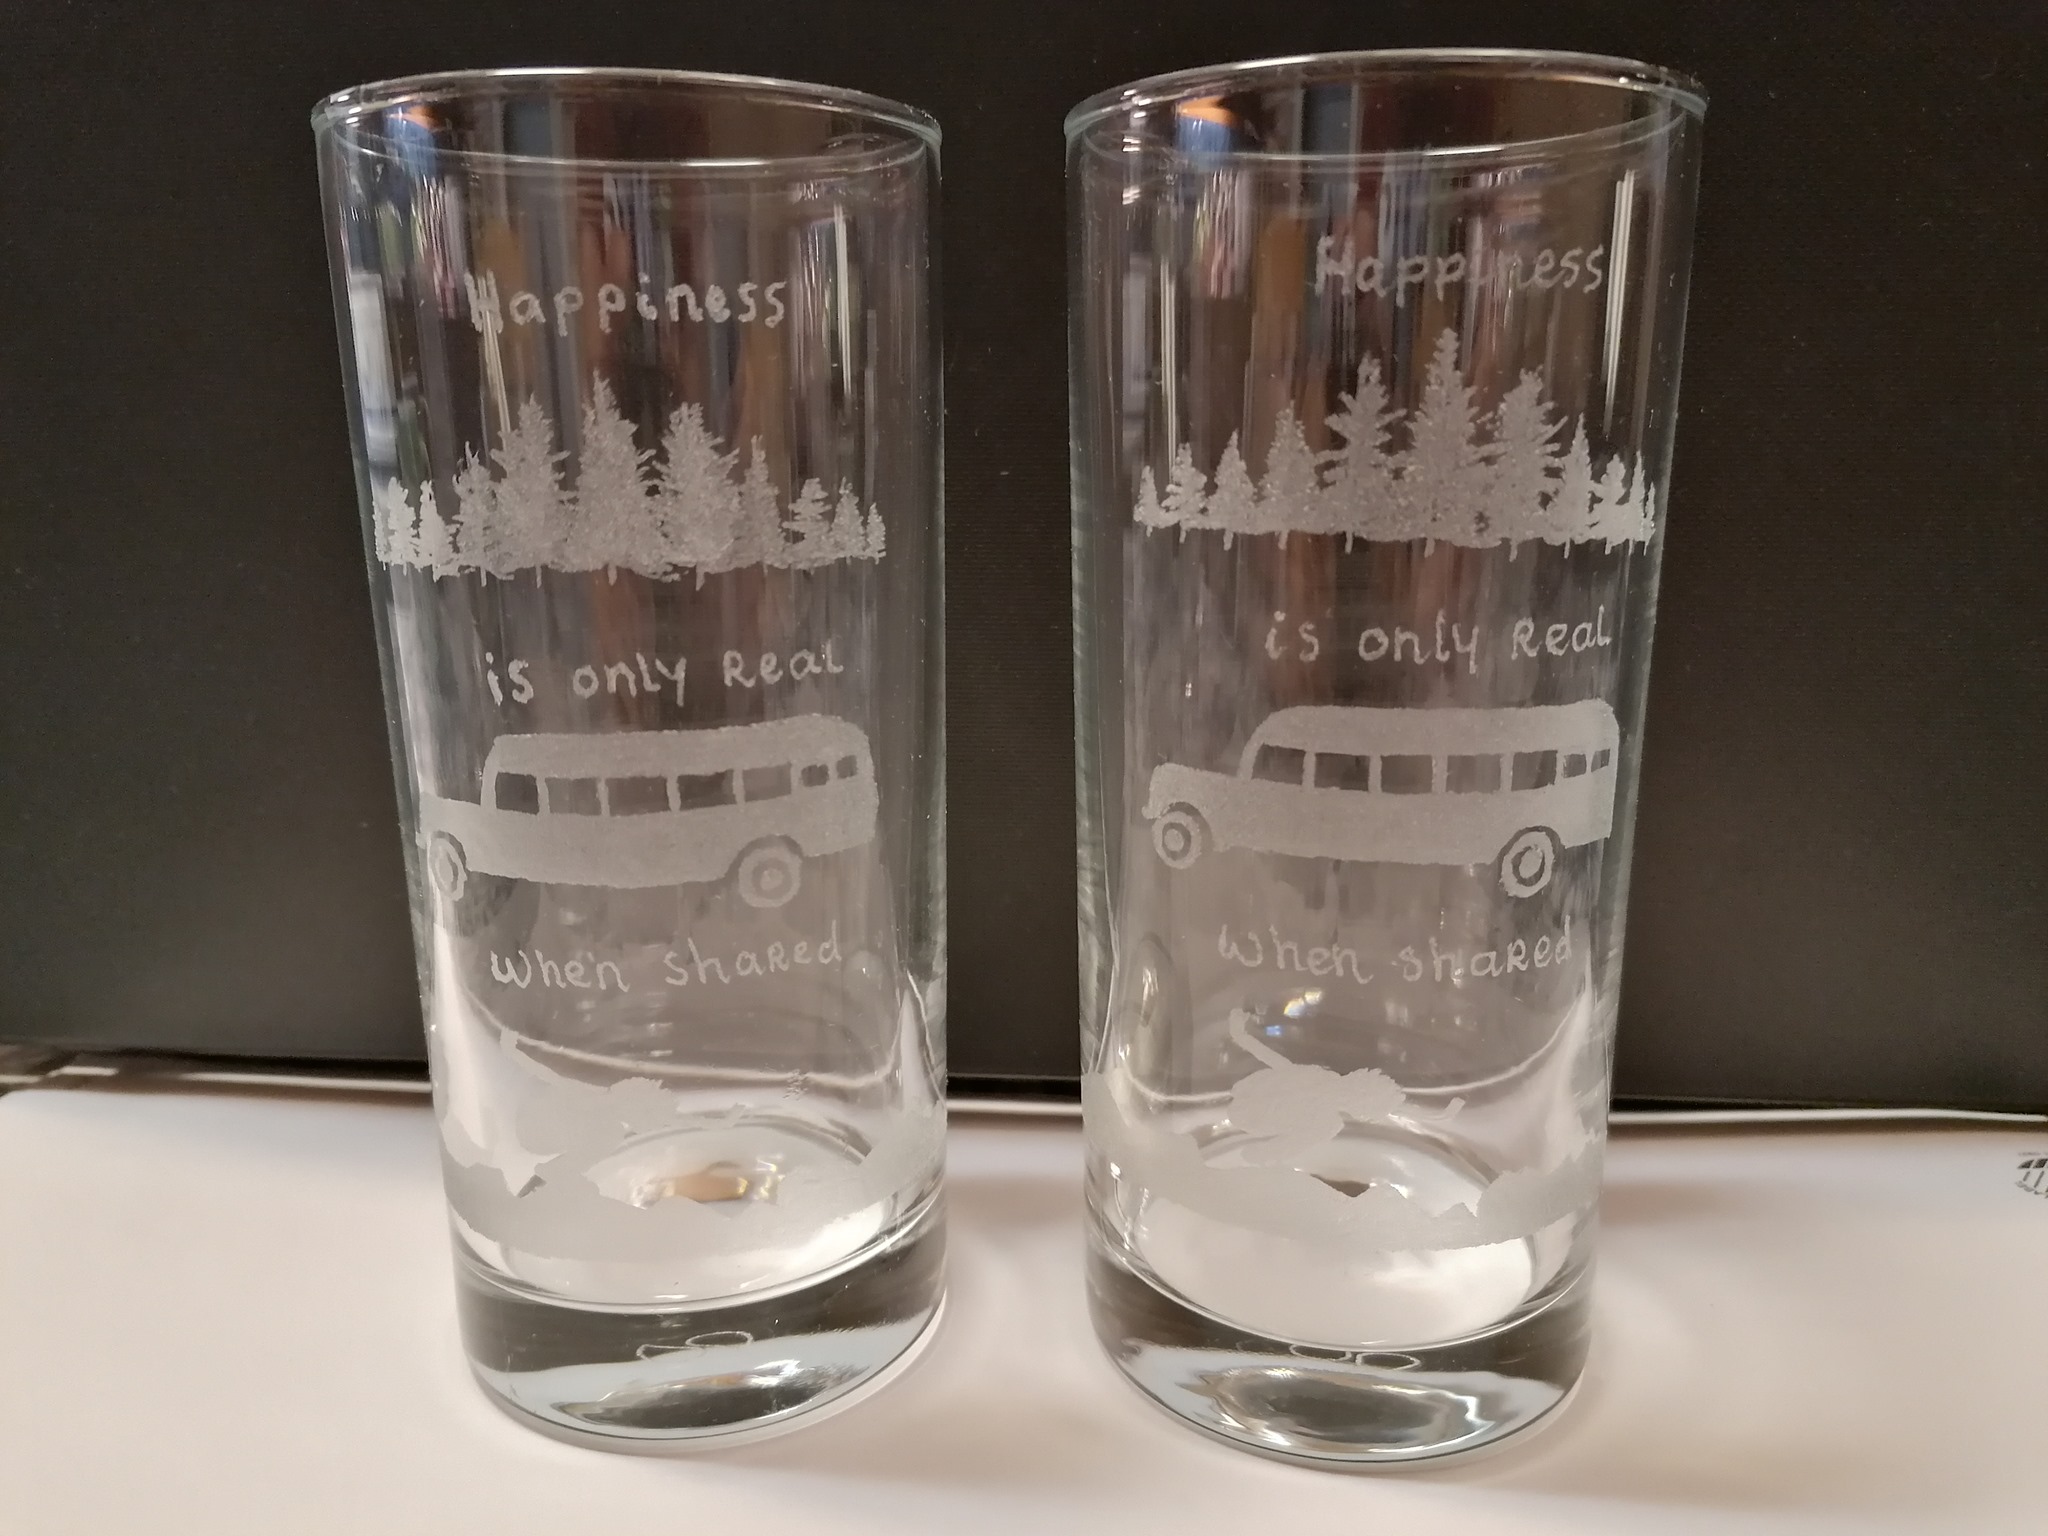 Diederik Blaauw's etched shot glasses